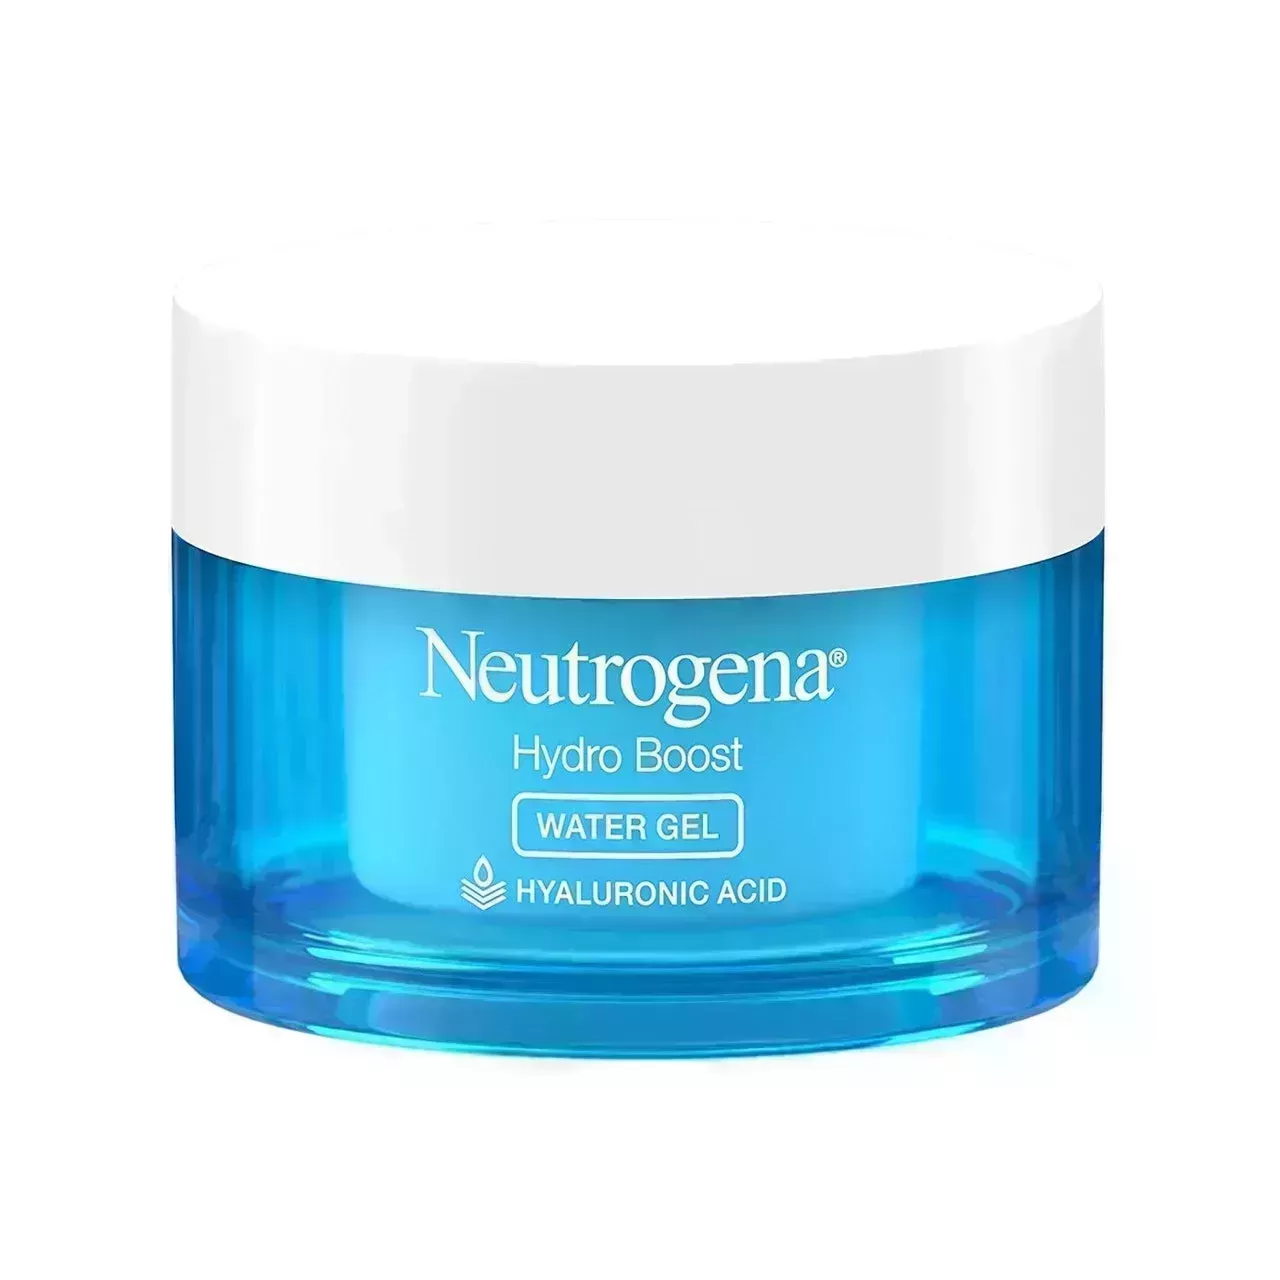 Neutrogena Hydro Boost Water Gel Face Moisturizer on white background